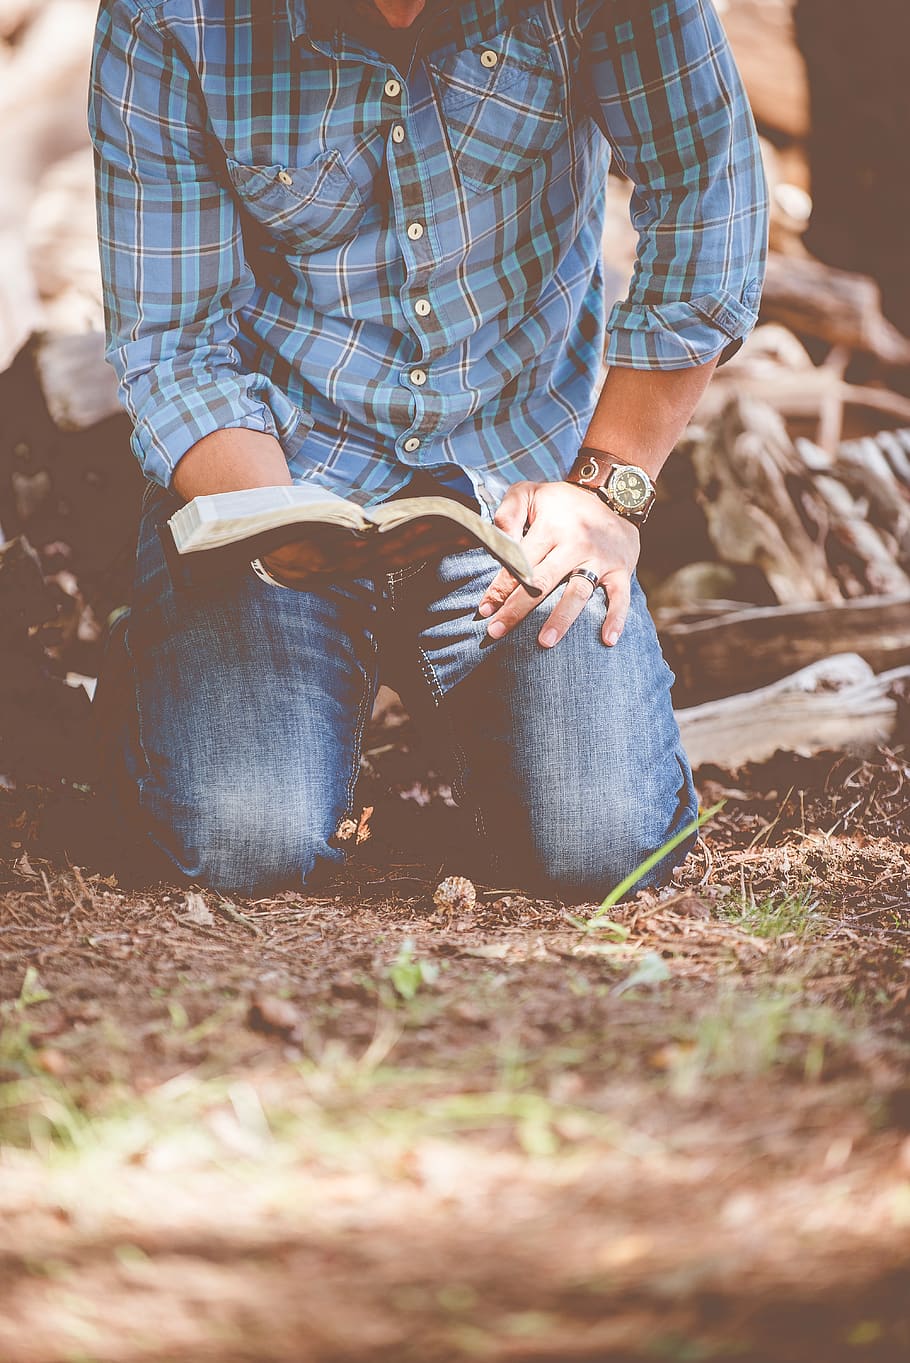 man, reading, cotton, shirt, watch, book, bible, forest, wood, kneeling